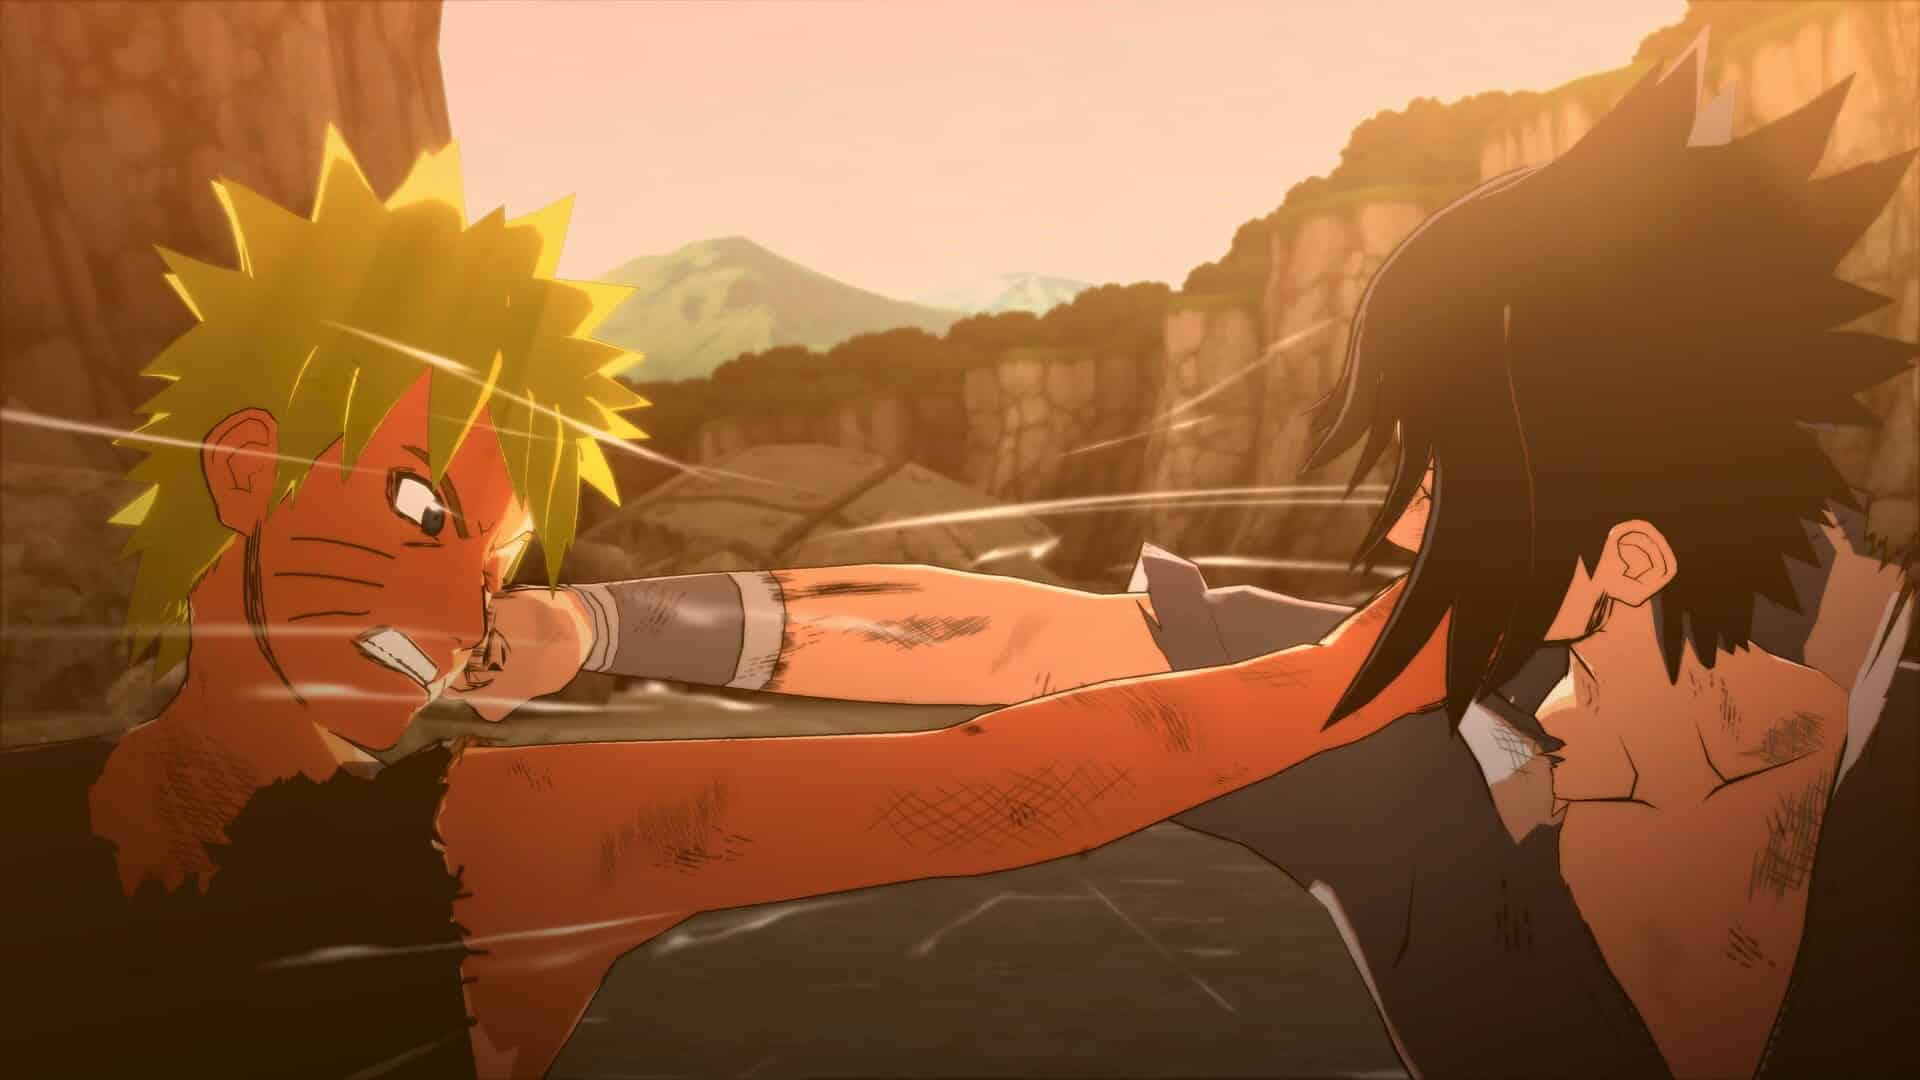 Naruto x Boruto: Ultimate Ninja Storm Connections Special Story Mode